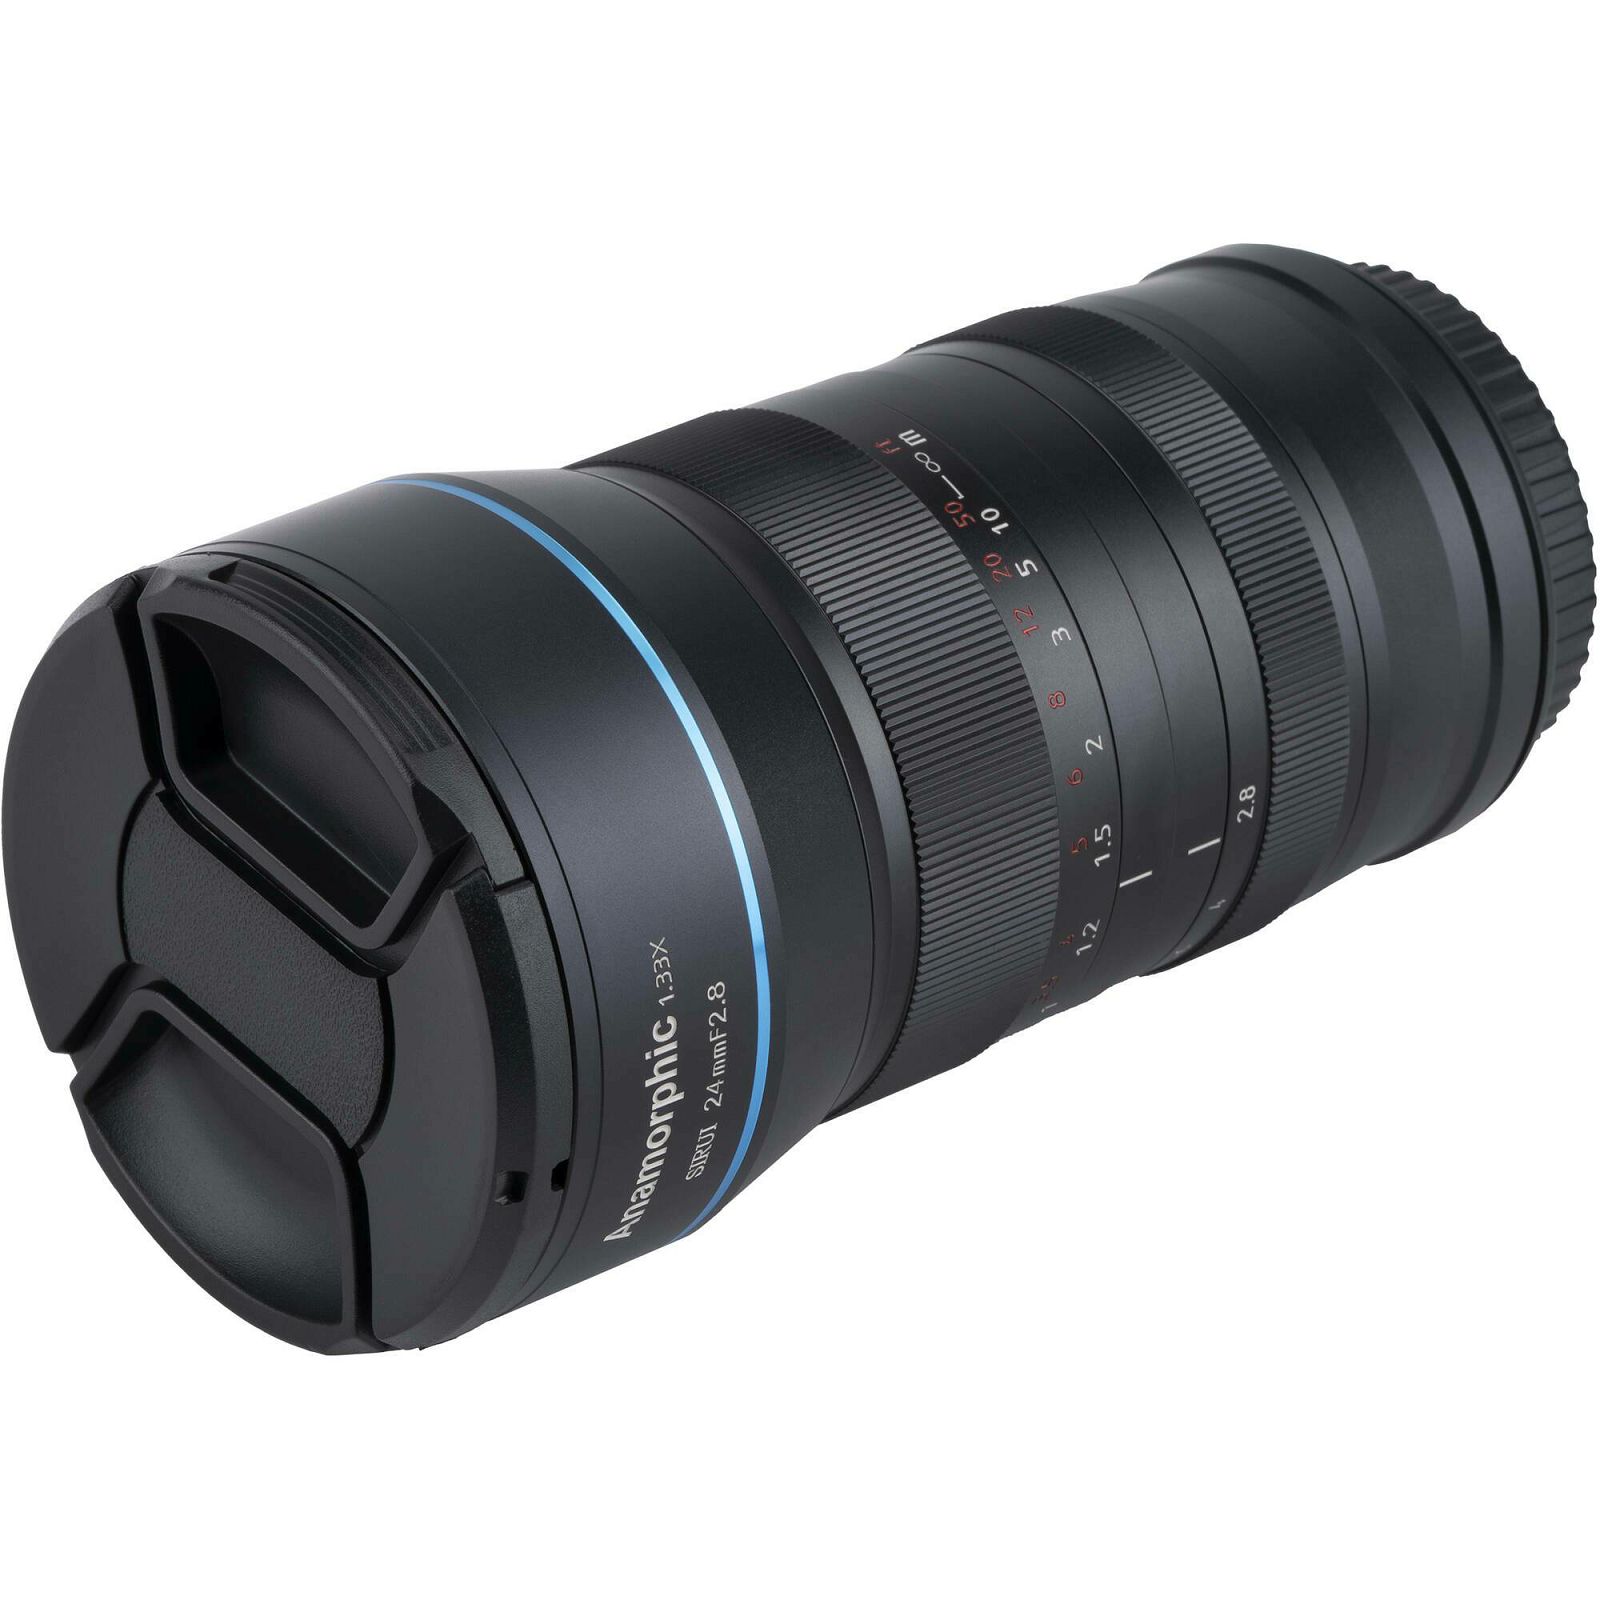 Sirui 24mm f/2.8 1.33x Anamorphic lens objektiv za Sony E (SR24-E)